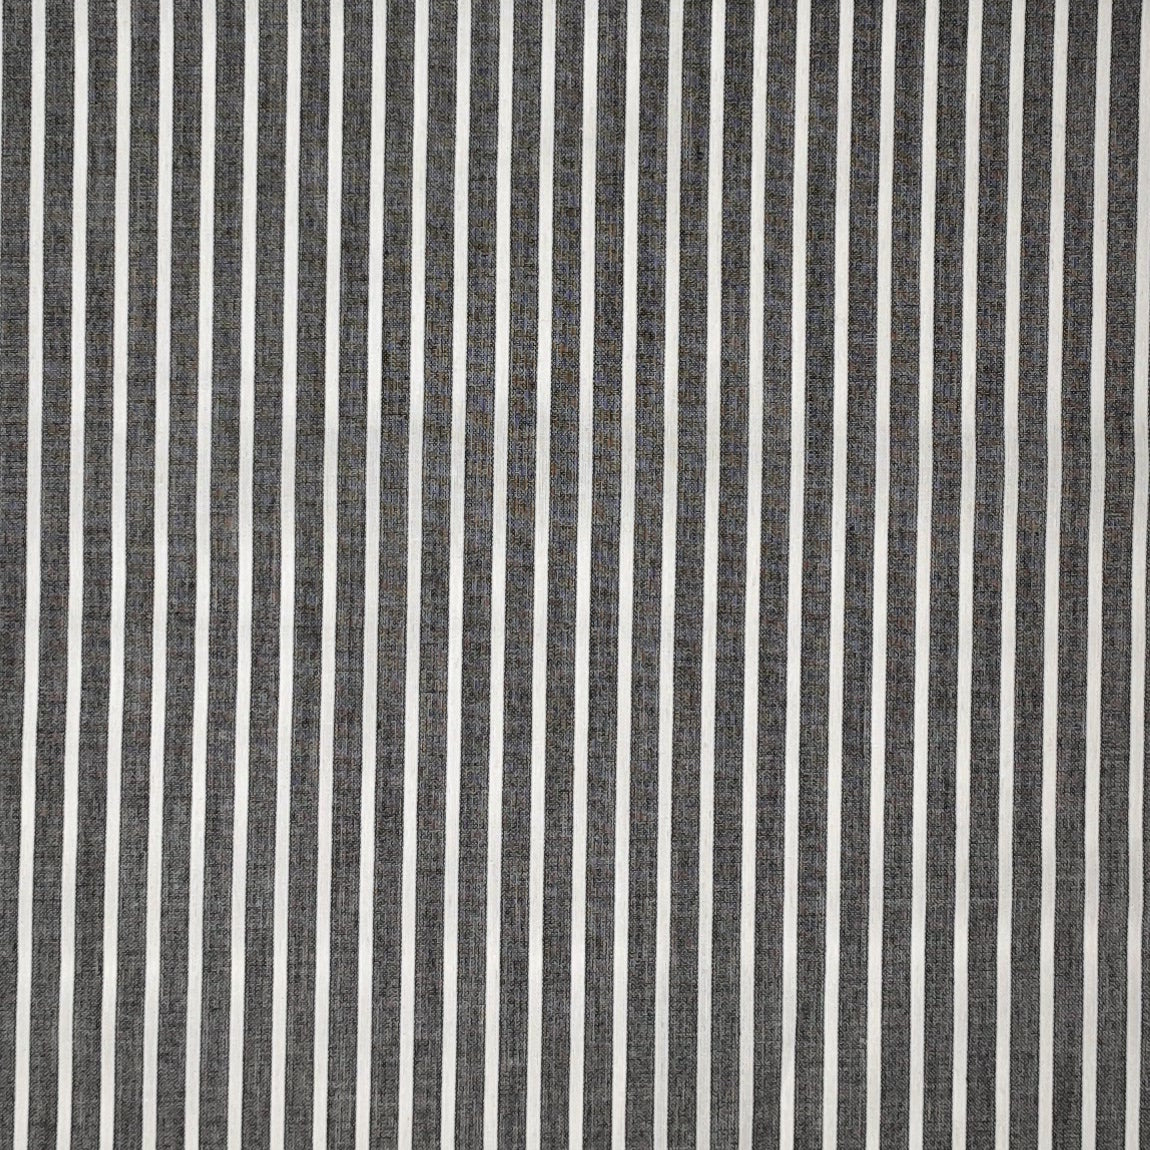 Black Ivory Stripe Fabric, Woven Crepe Fabric